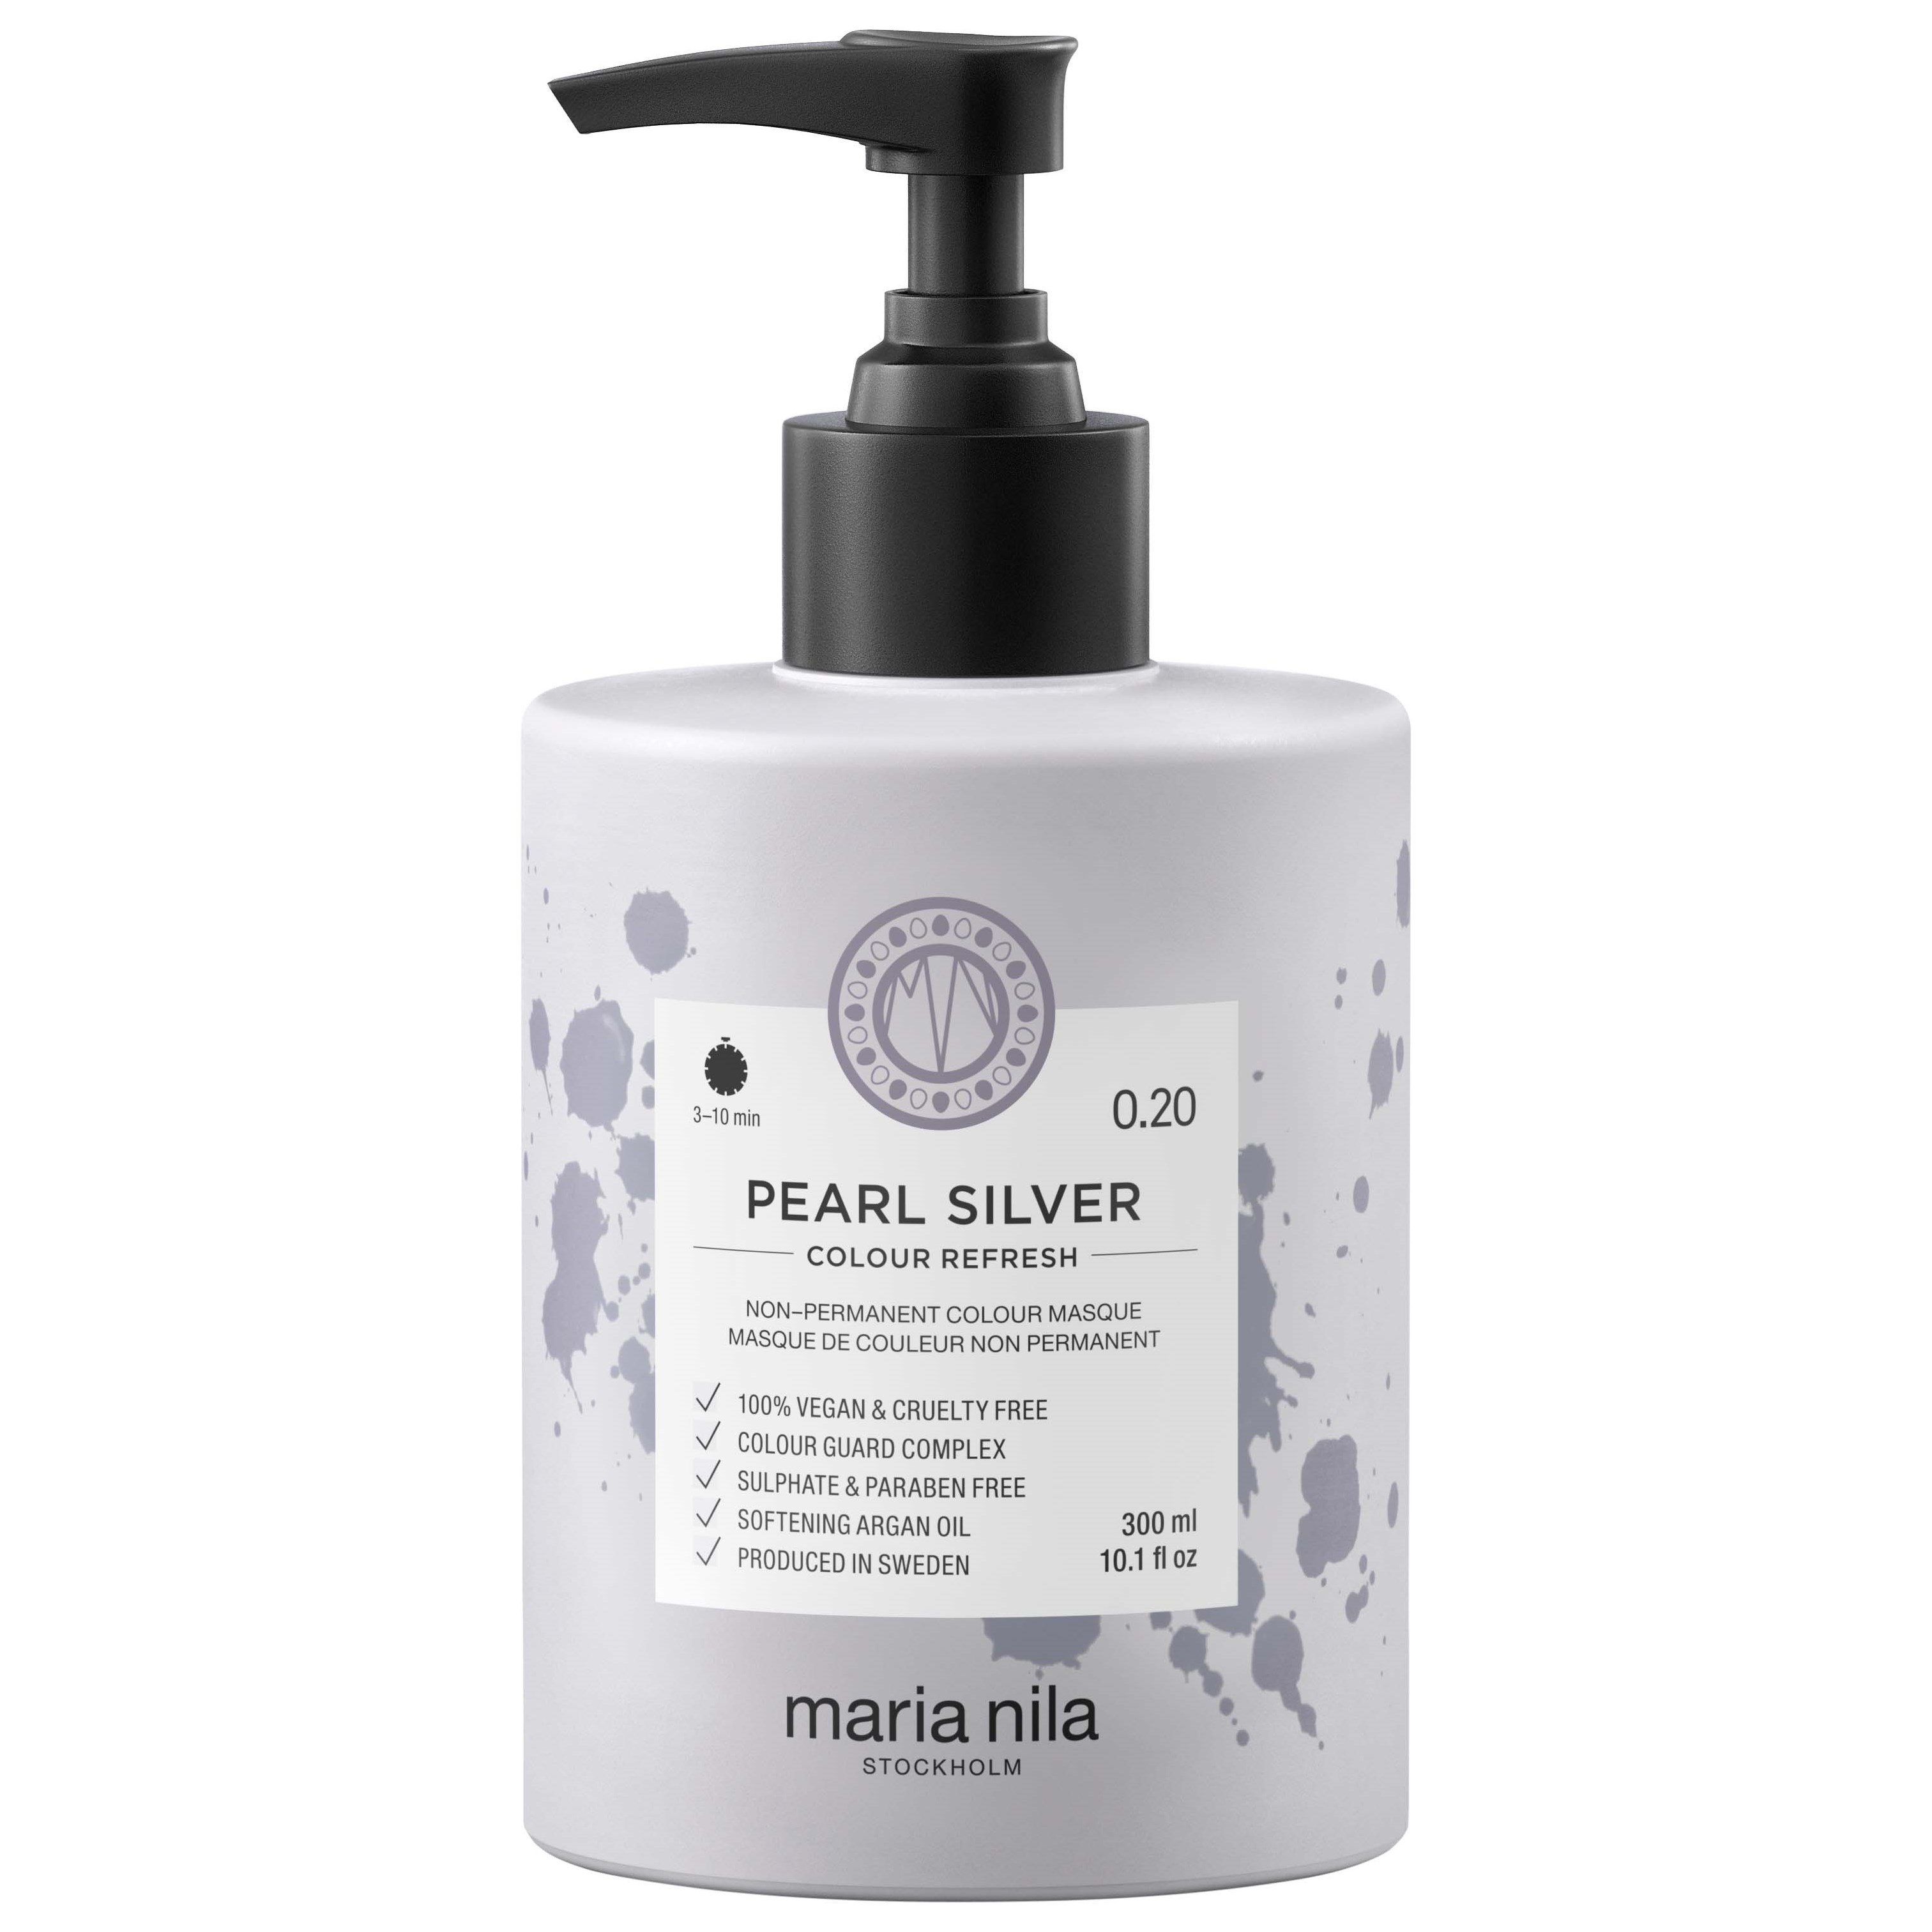 Maria Nila Colour Refresh Pearl Silver, 300ml